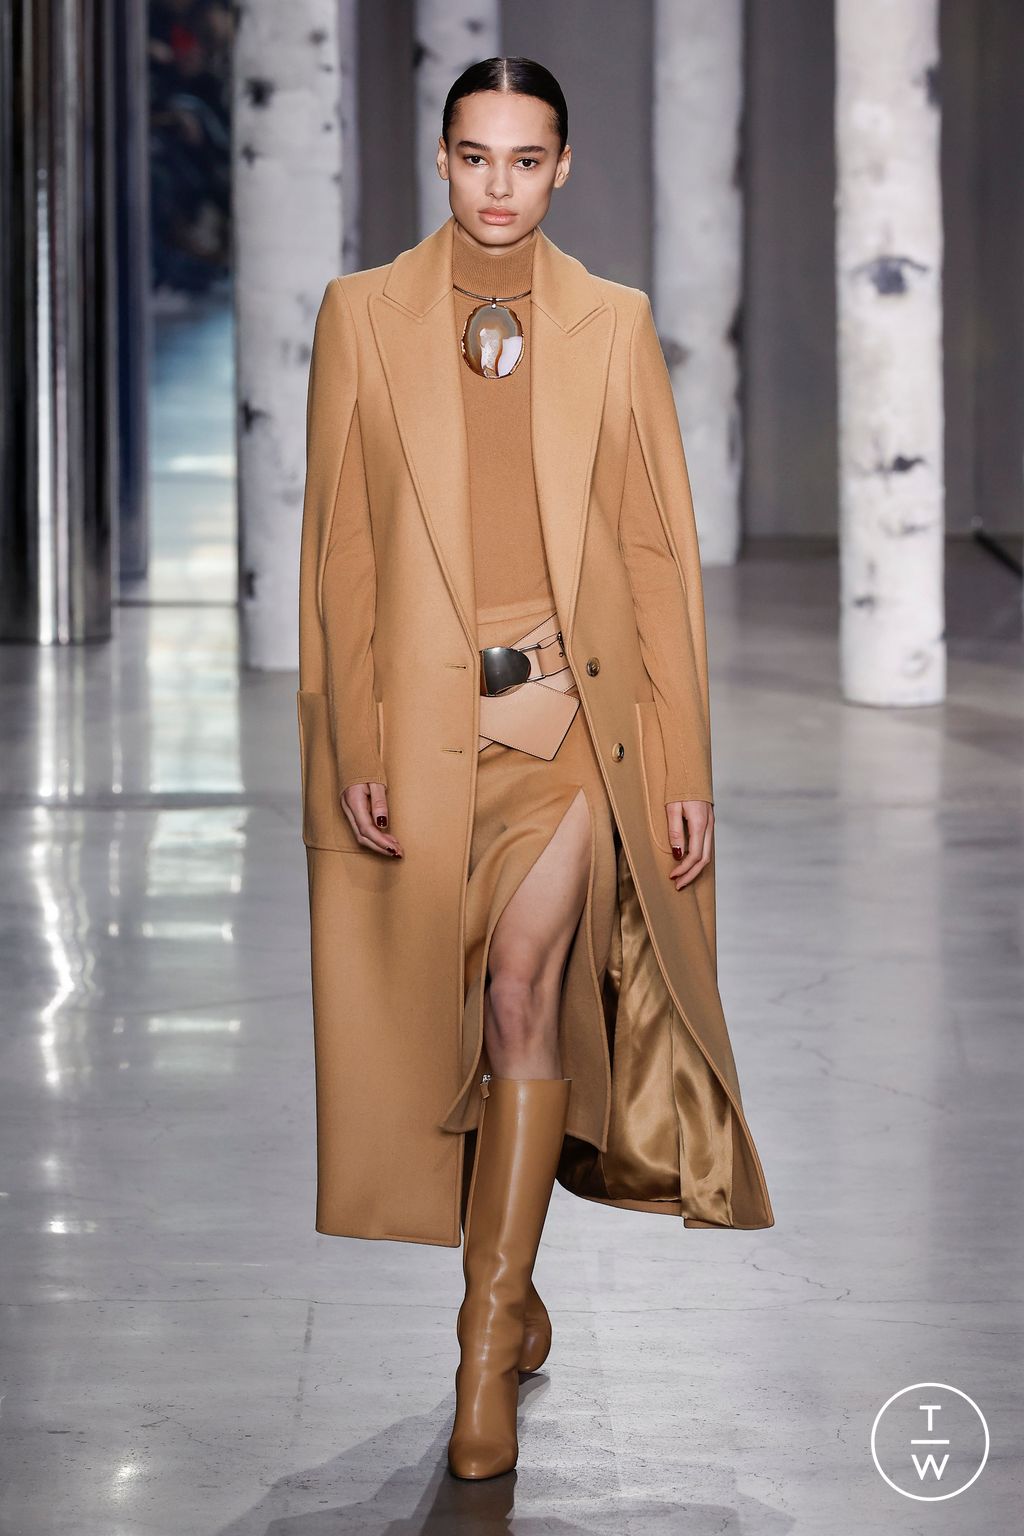 Michael Kors Collection FW23 womenswear #29 - Tagwalk: The Fashion